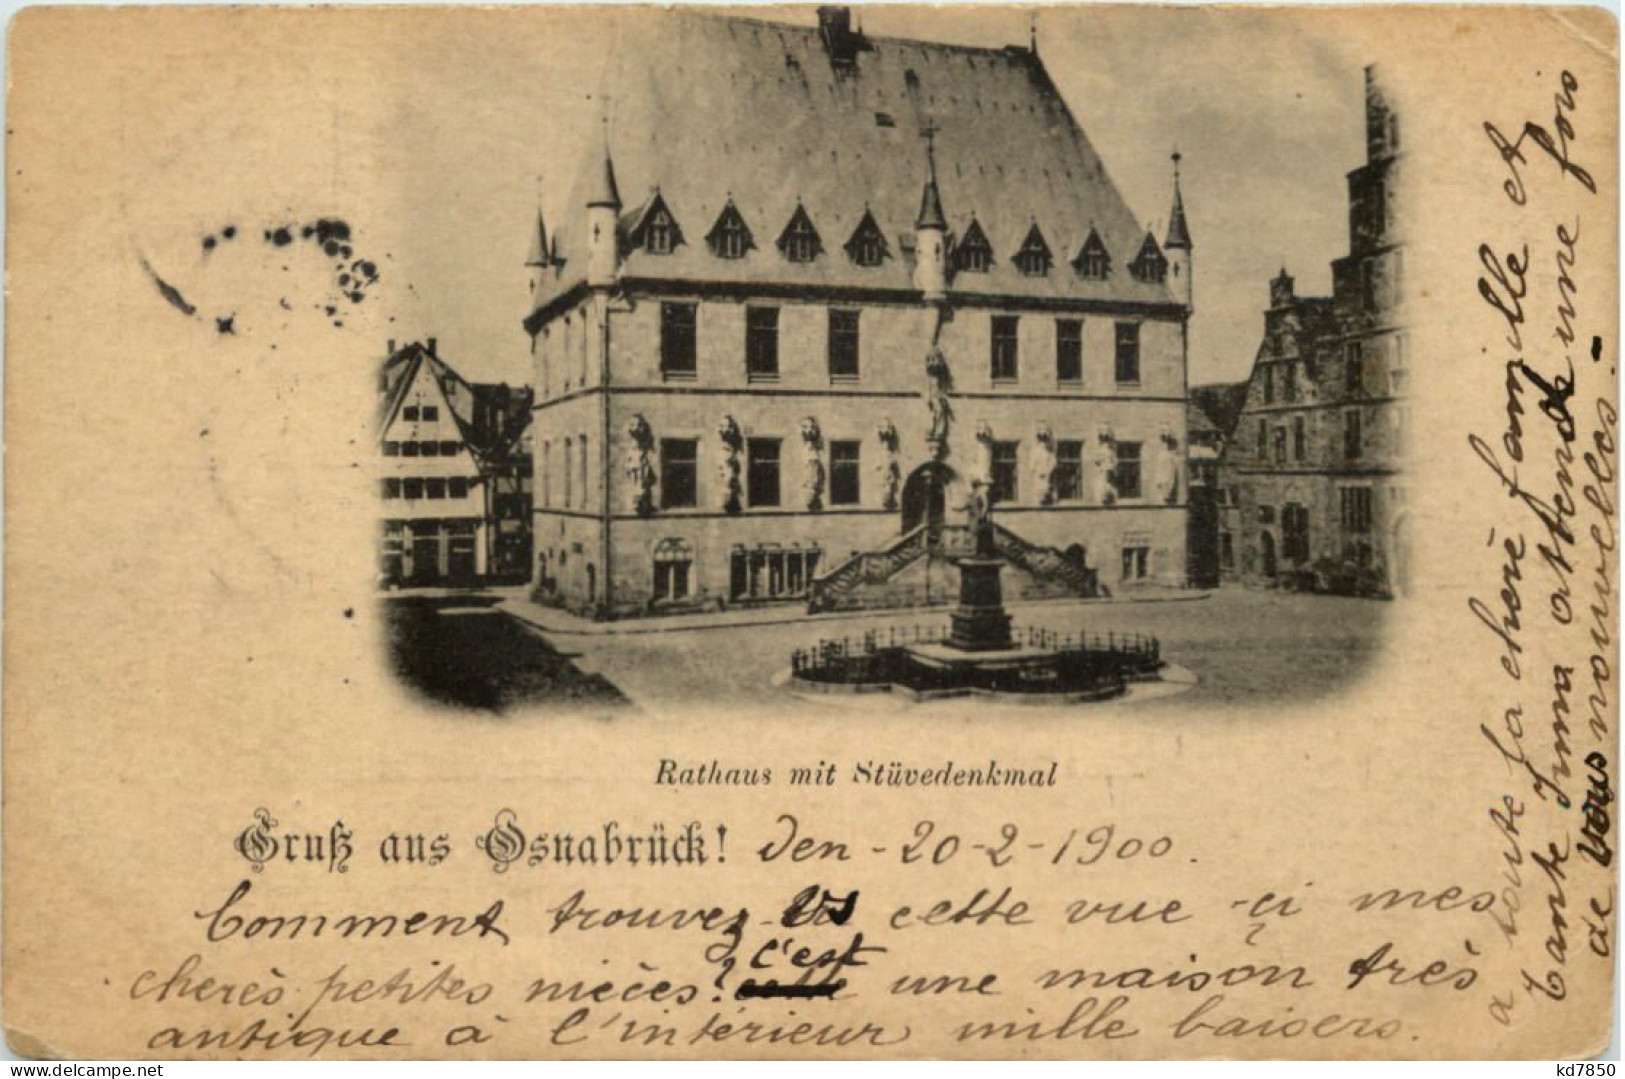 Gruss Aus Osnabrück - Rathaus Mit Stüvedenkmal - Osnabrueck